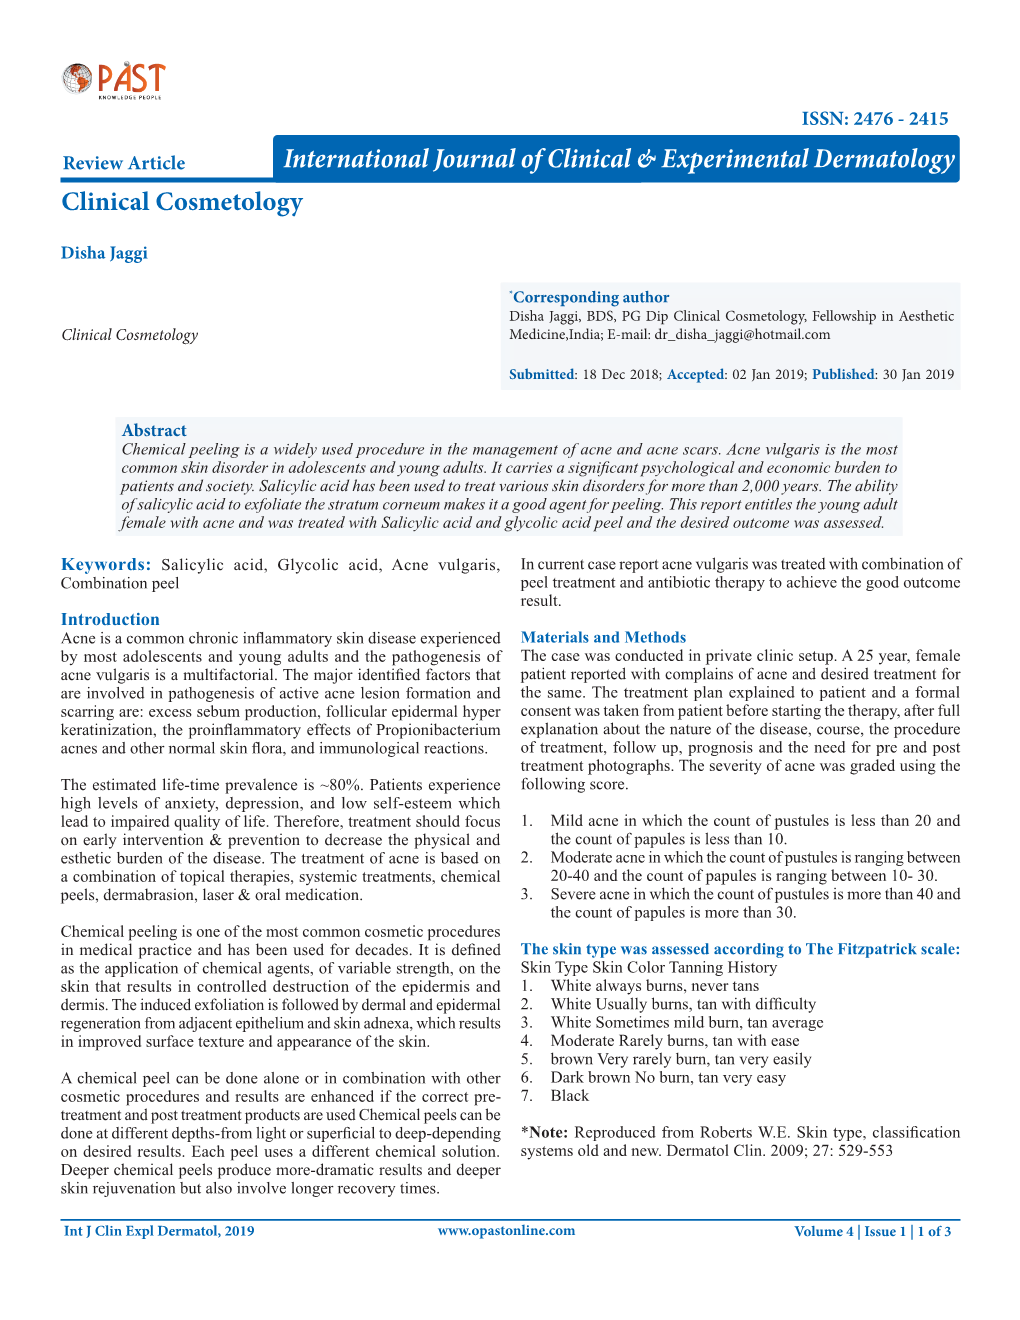 International Journal of Clinical & Experimental Dermatology